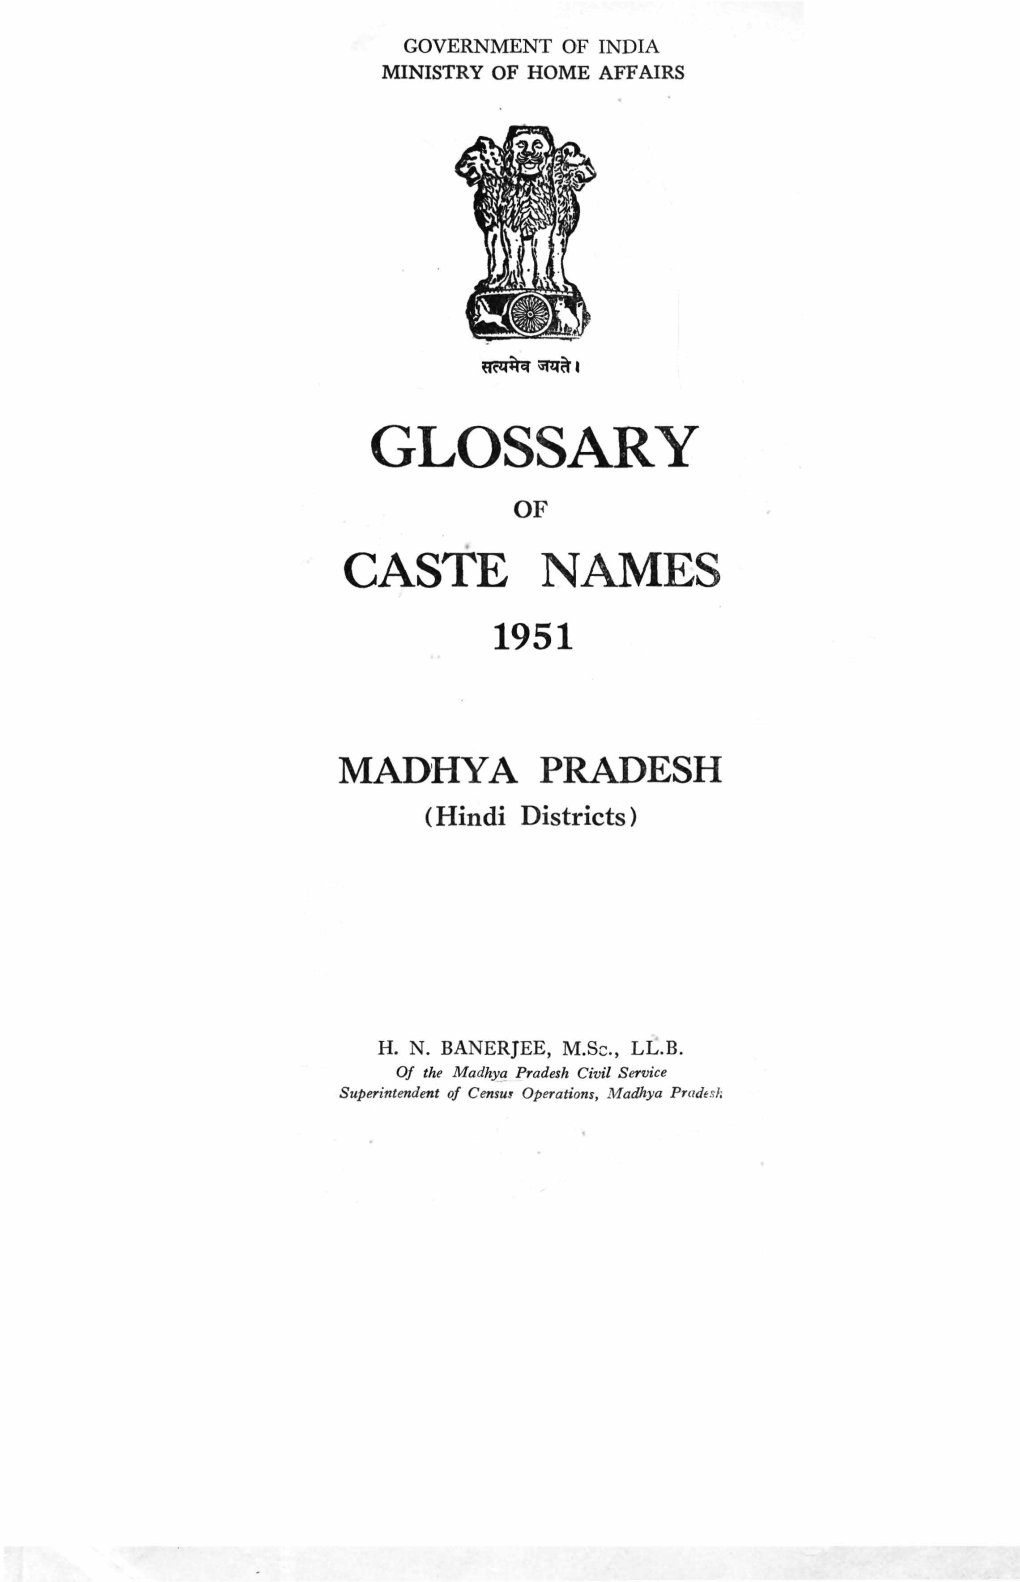 Glossary of Caste Names, Madhya Pradesh